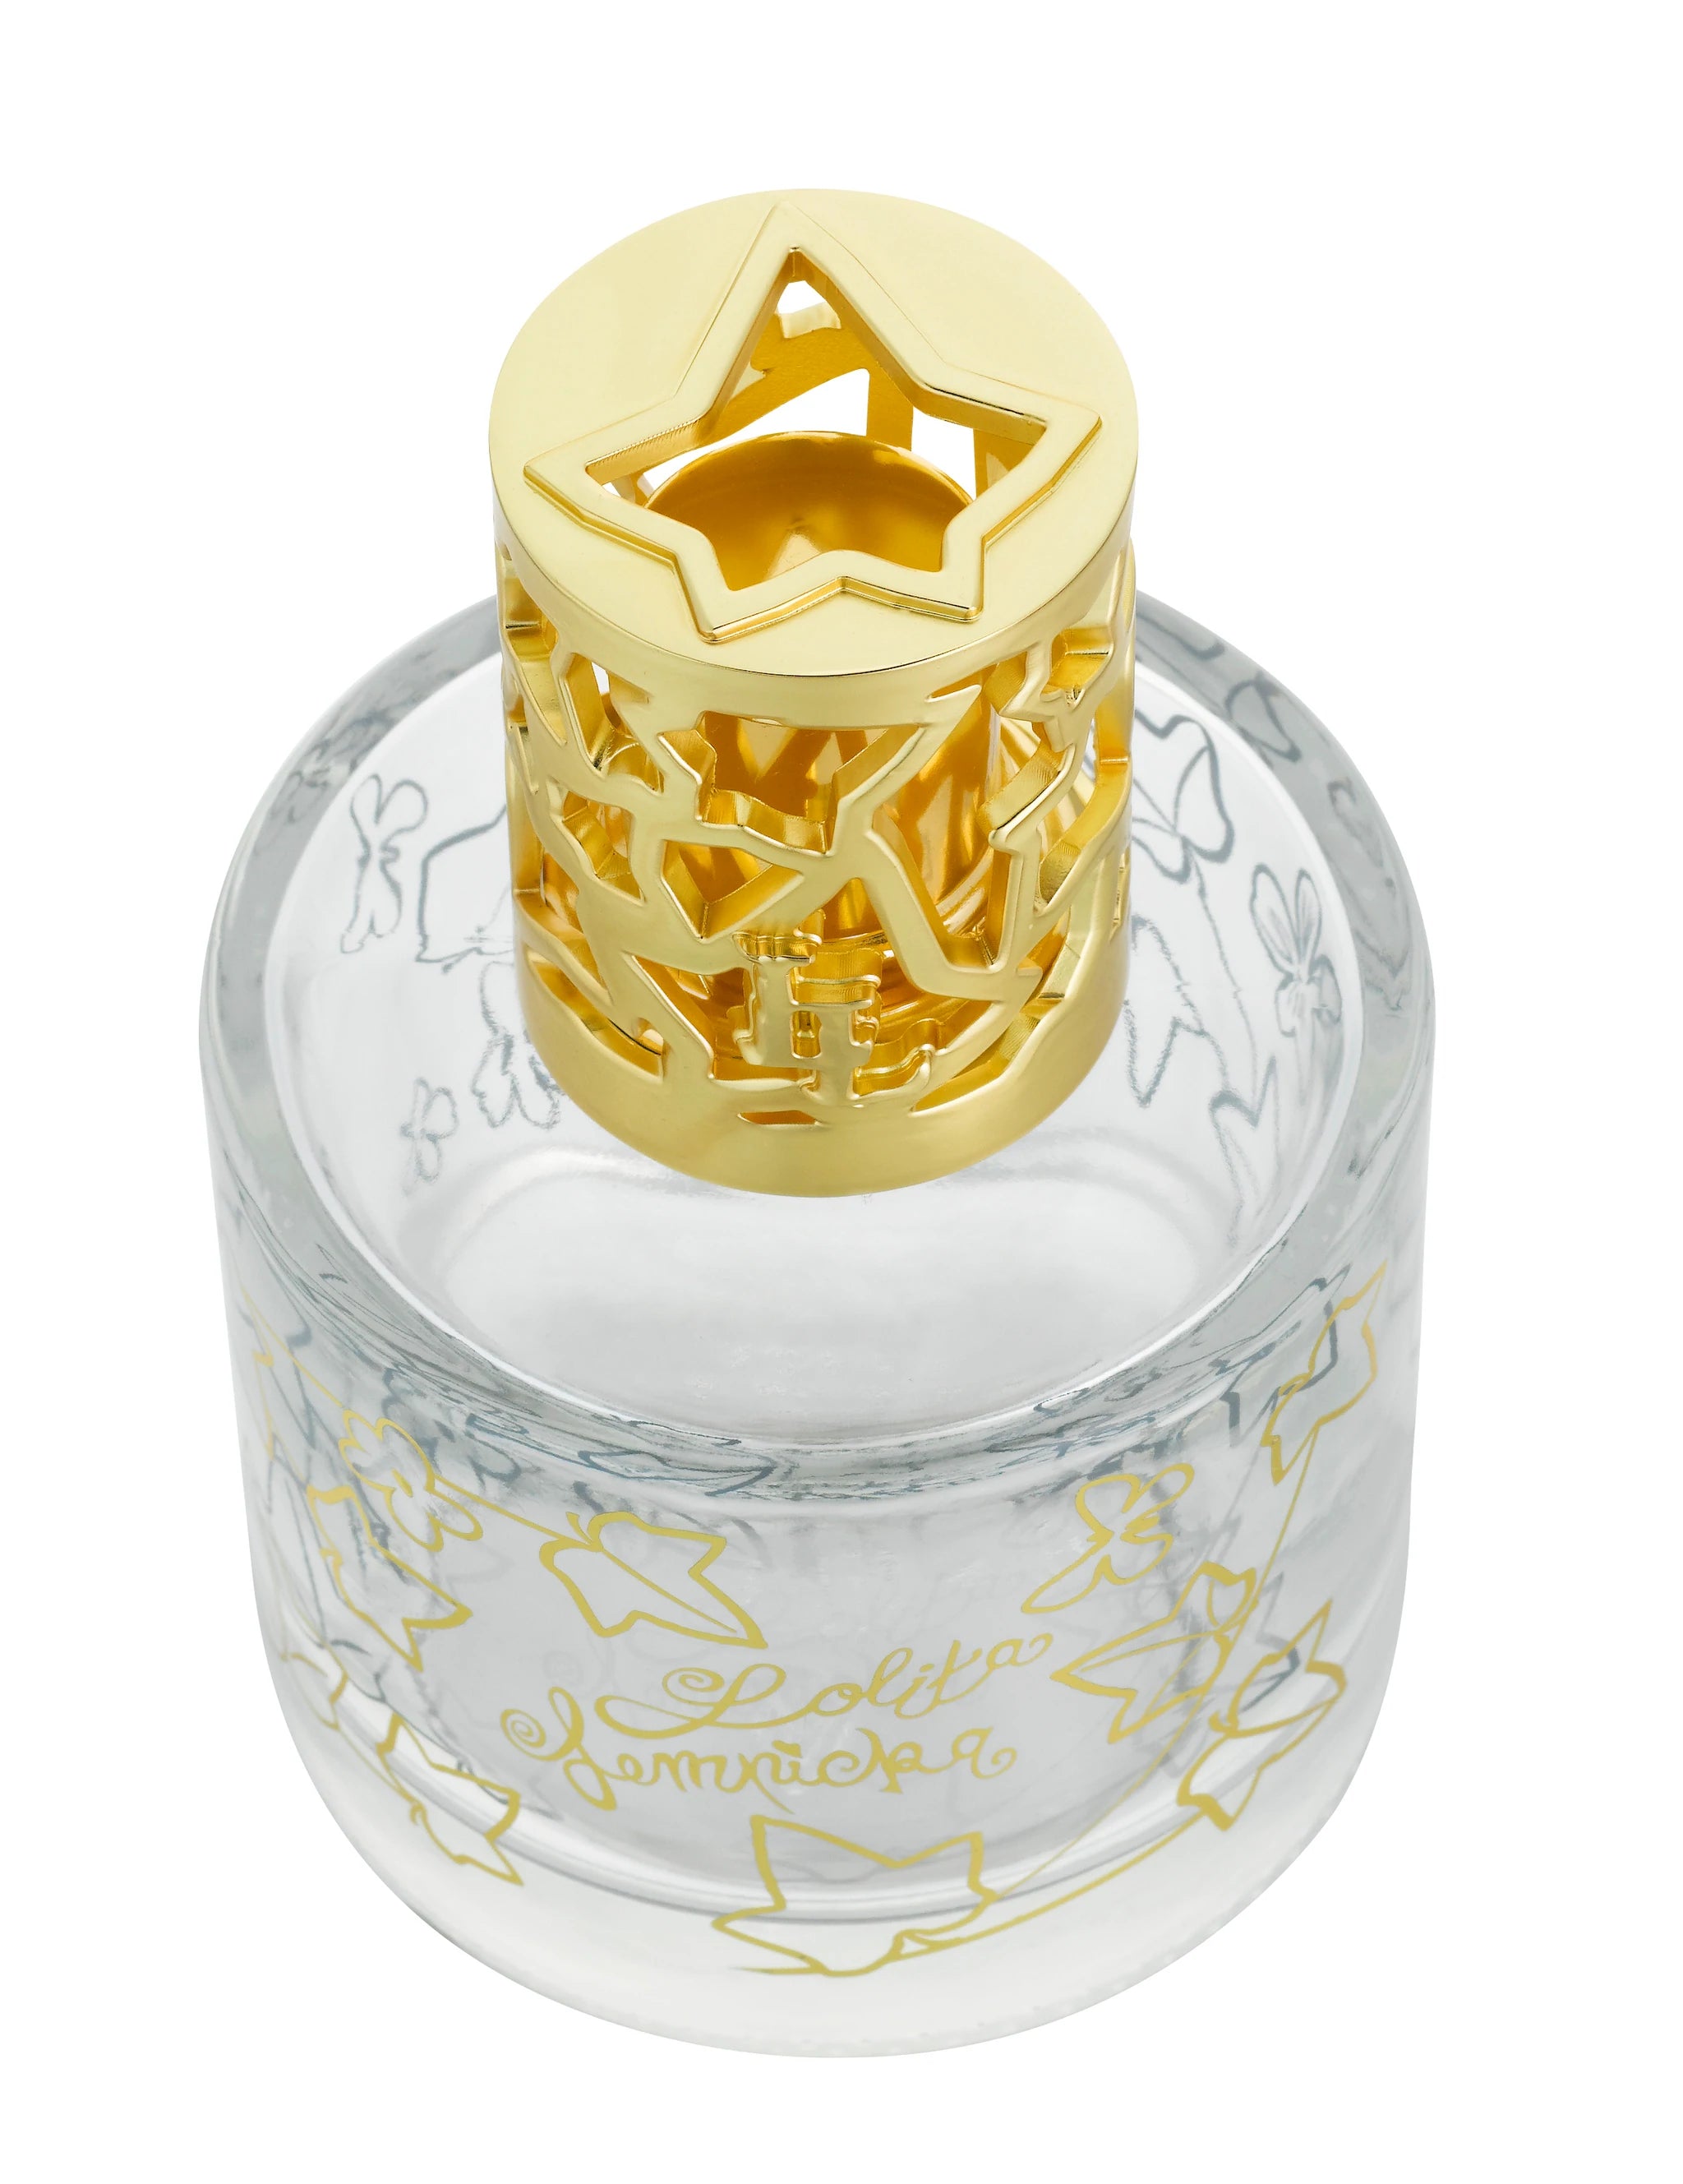 Coffret Lampe Berger Pure Lolita Lempicka transparente + parfum Lolita Lempicka    - Maison Berger Paris - Parfums d'ambiance - 